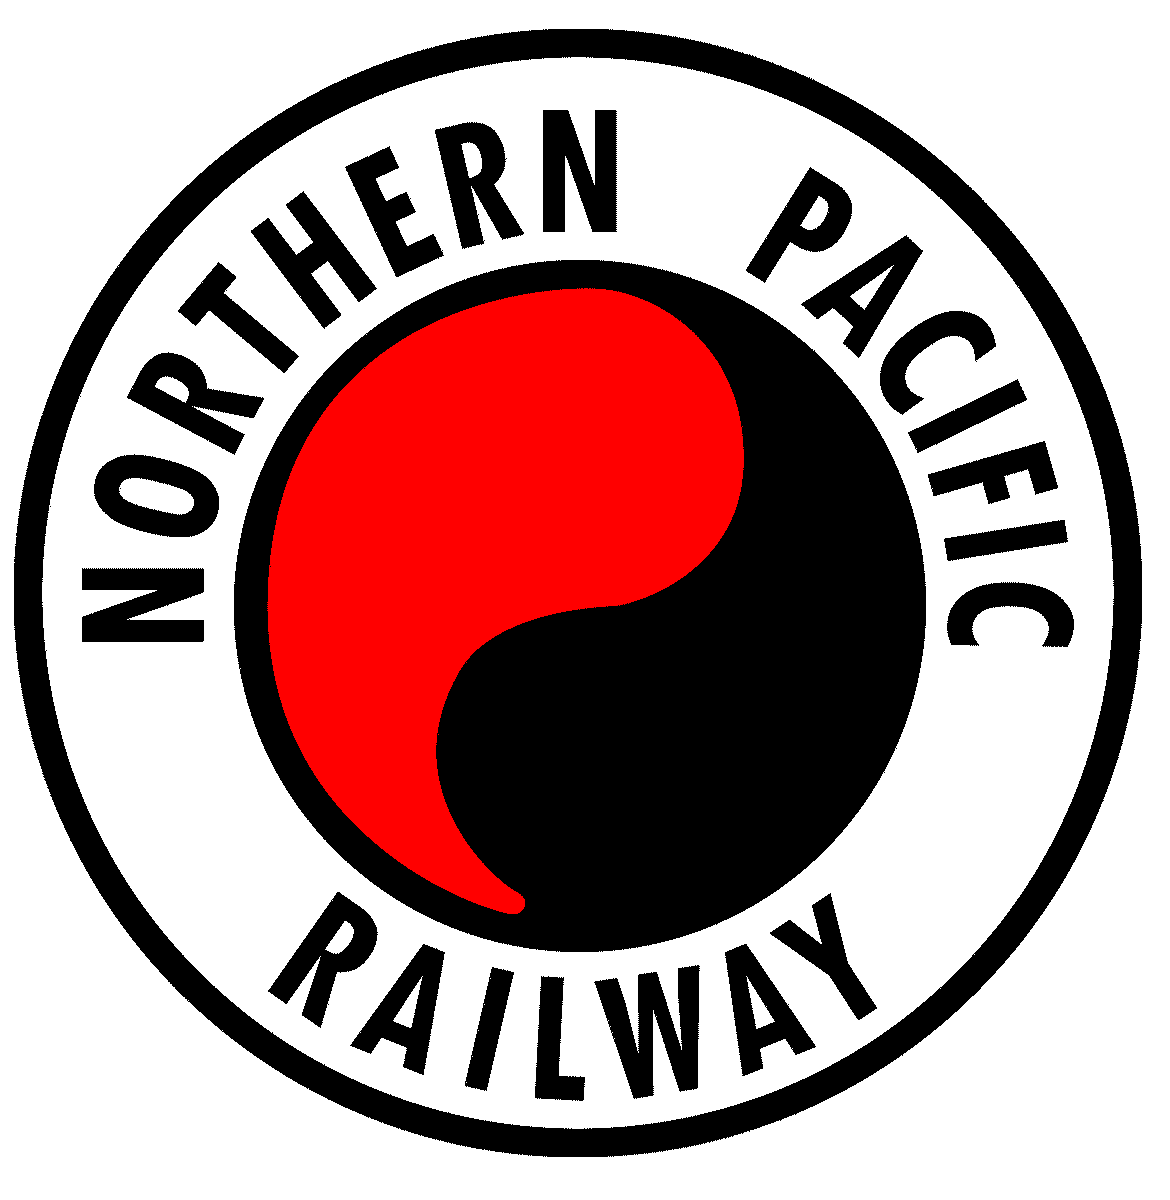 Transportation Company - Northern Pacific - Railroad